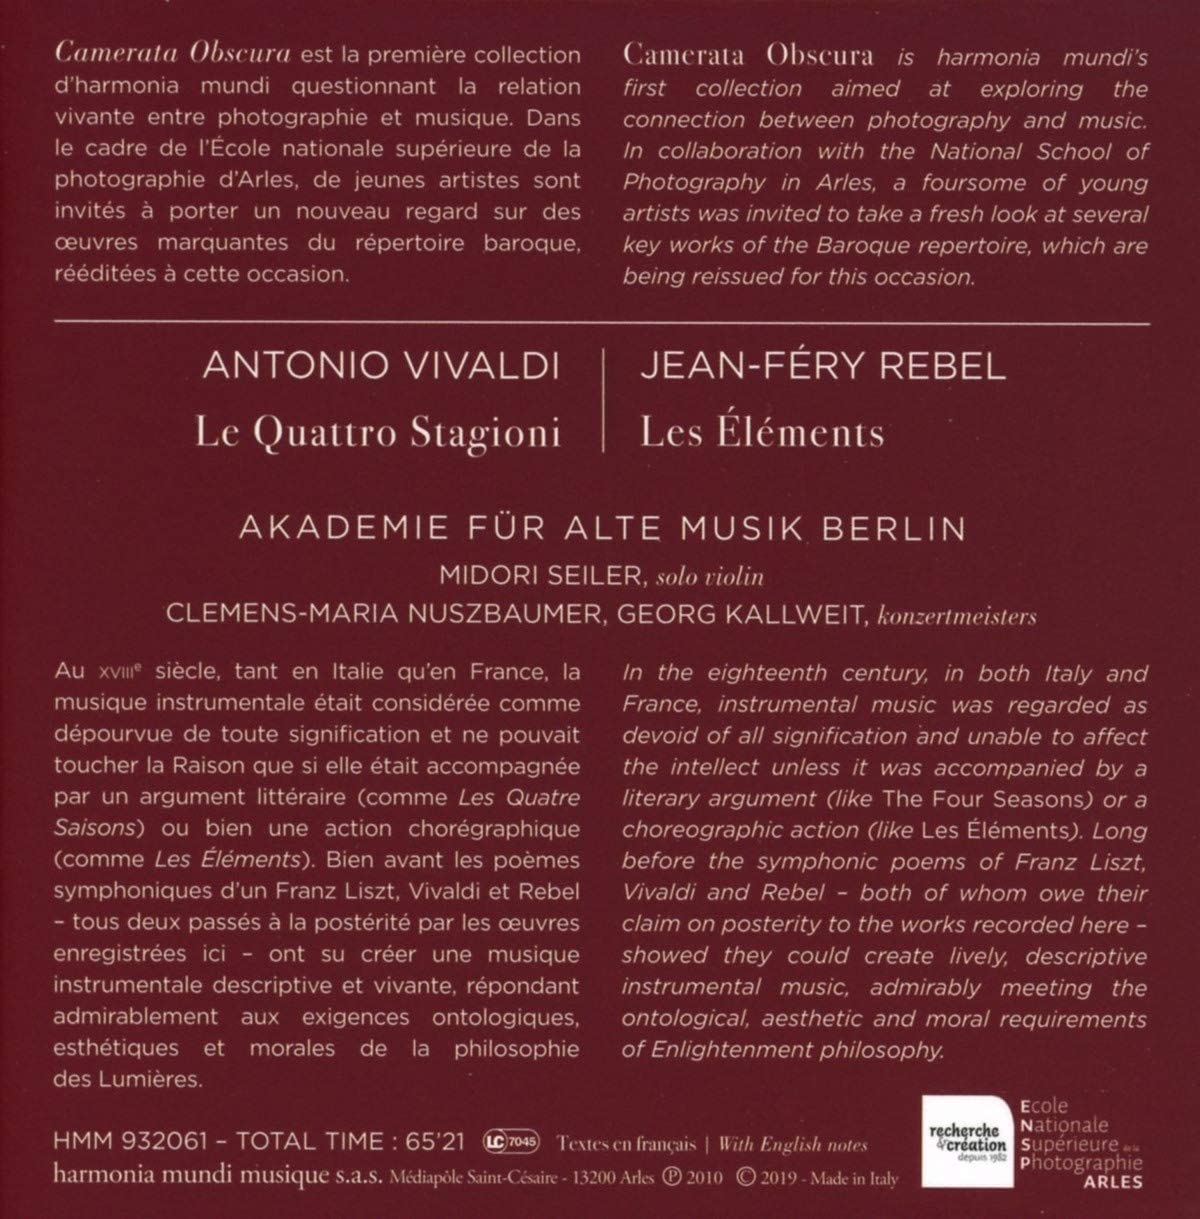 Vivaldi: Le Quattro Stagioni / Rebel: Les Éléments | Akademie Fuer Alte Musik Berlin, Midori Seiler, Clemens-Maria Nuszbaumer, Georg Kallweit